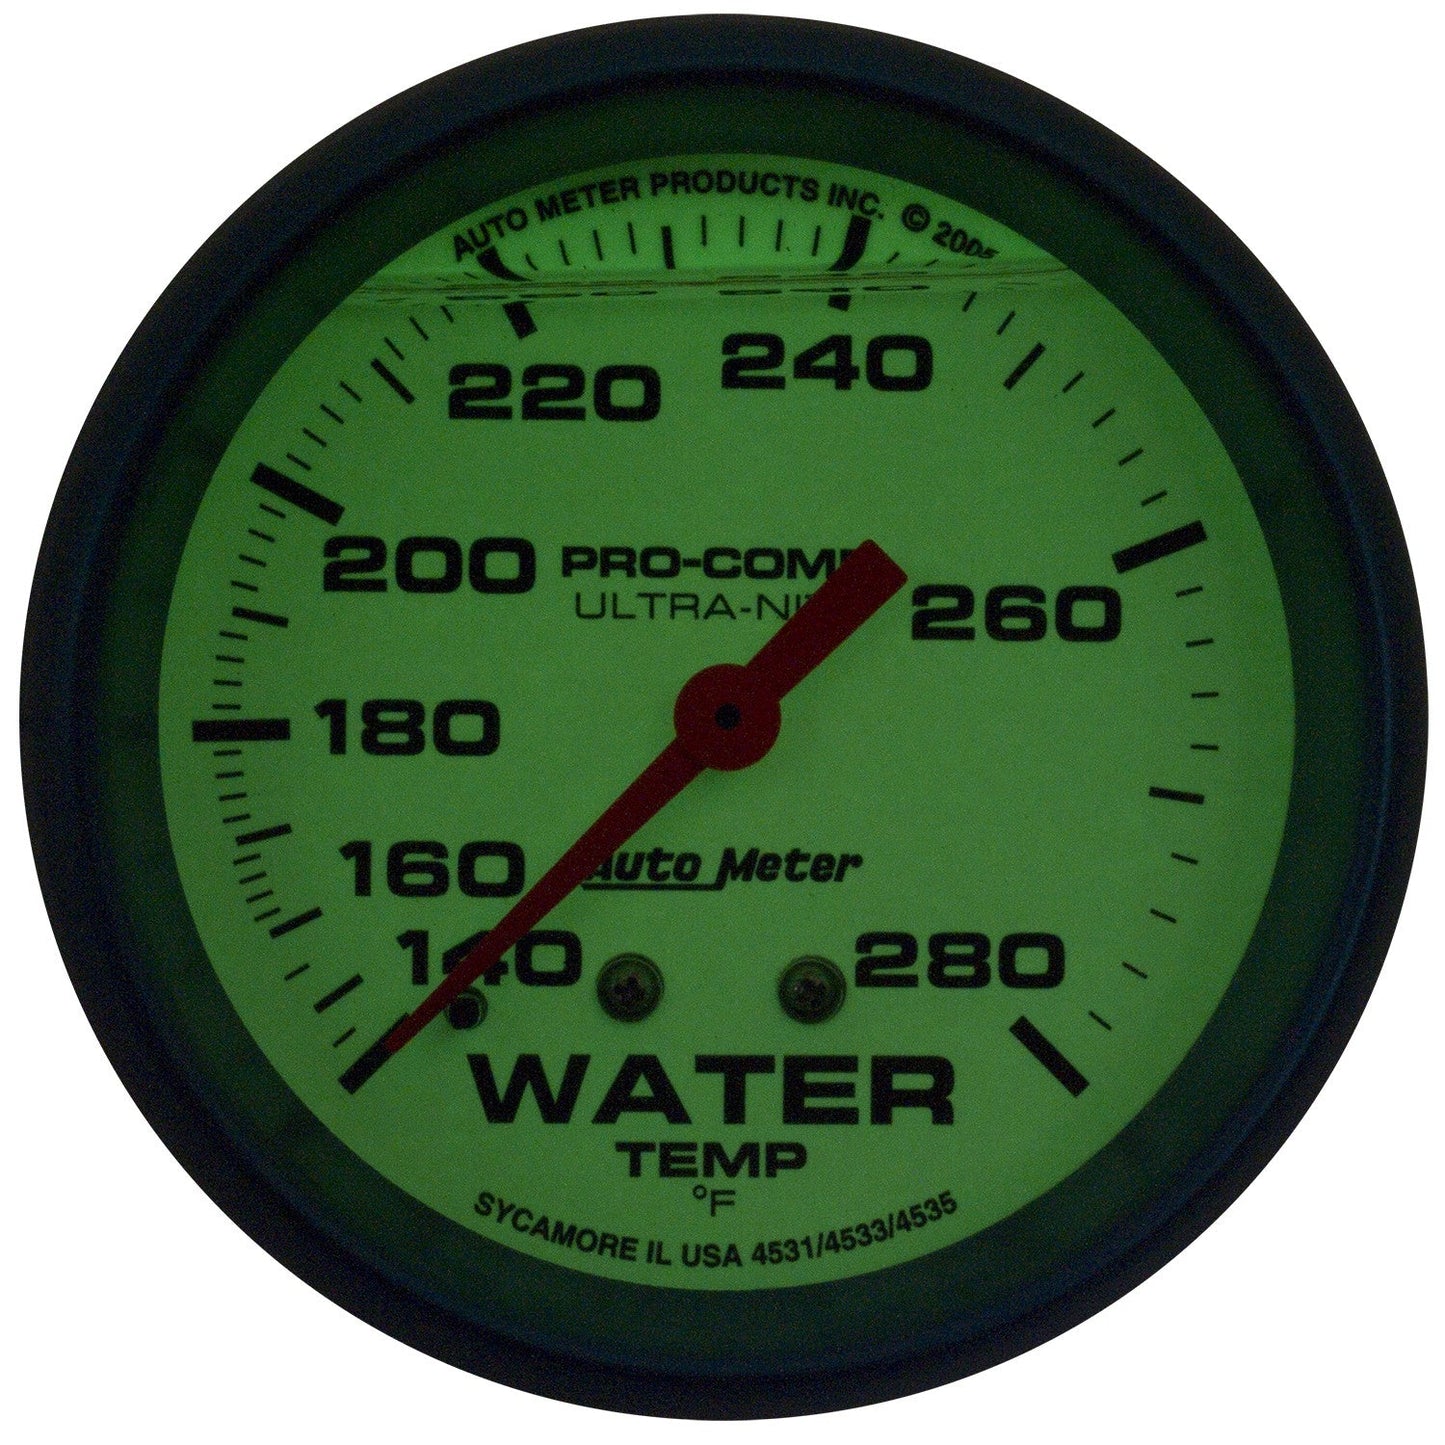 AutoMeter - 2-5/8" WATER TEMPERATURE, LIQUID FILLED, 140-280 °F, 6 FT., MECHANICAL, ULTRA-NITE (4231)